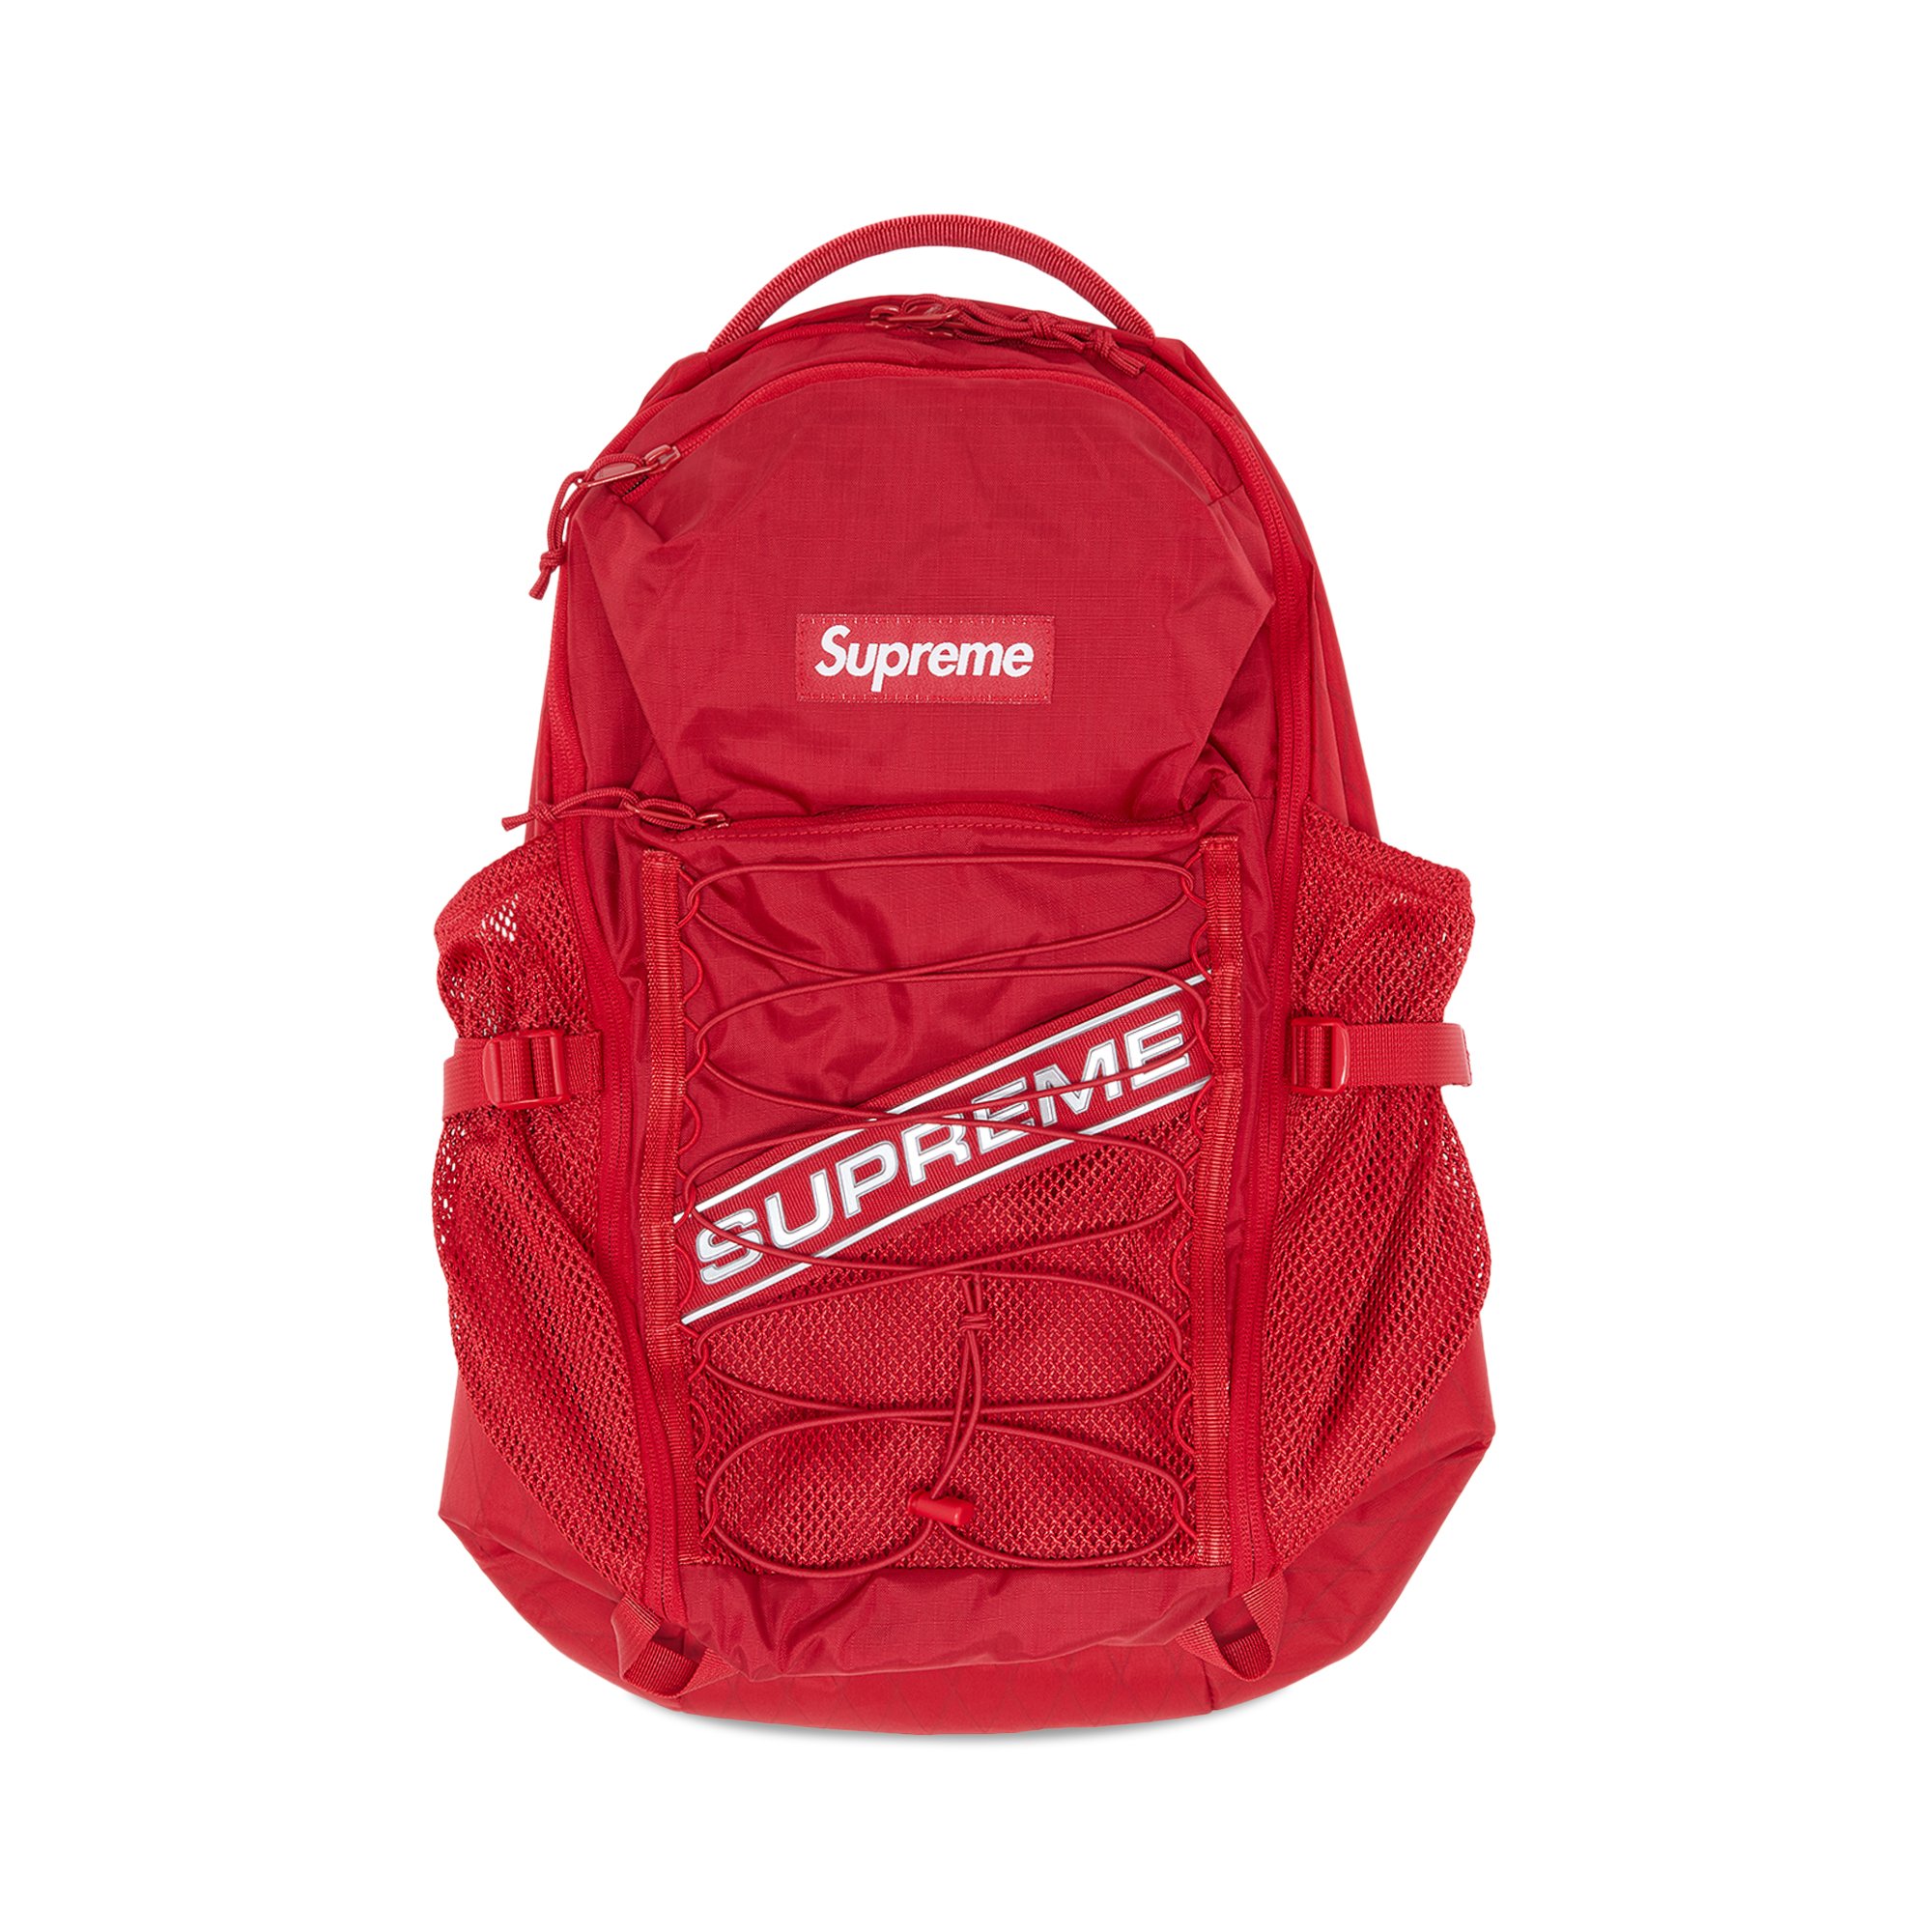 Supreme Backpack 'Red'